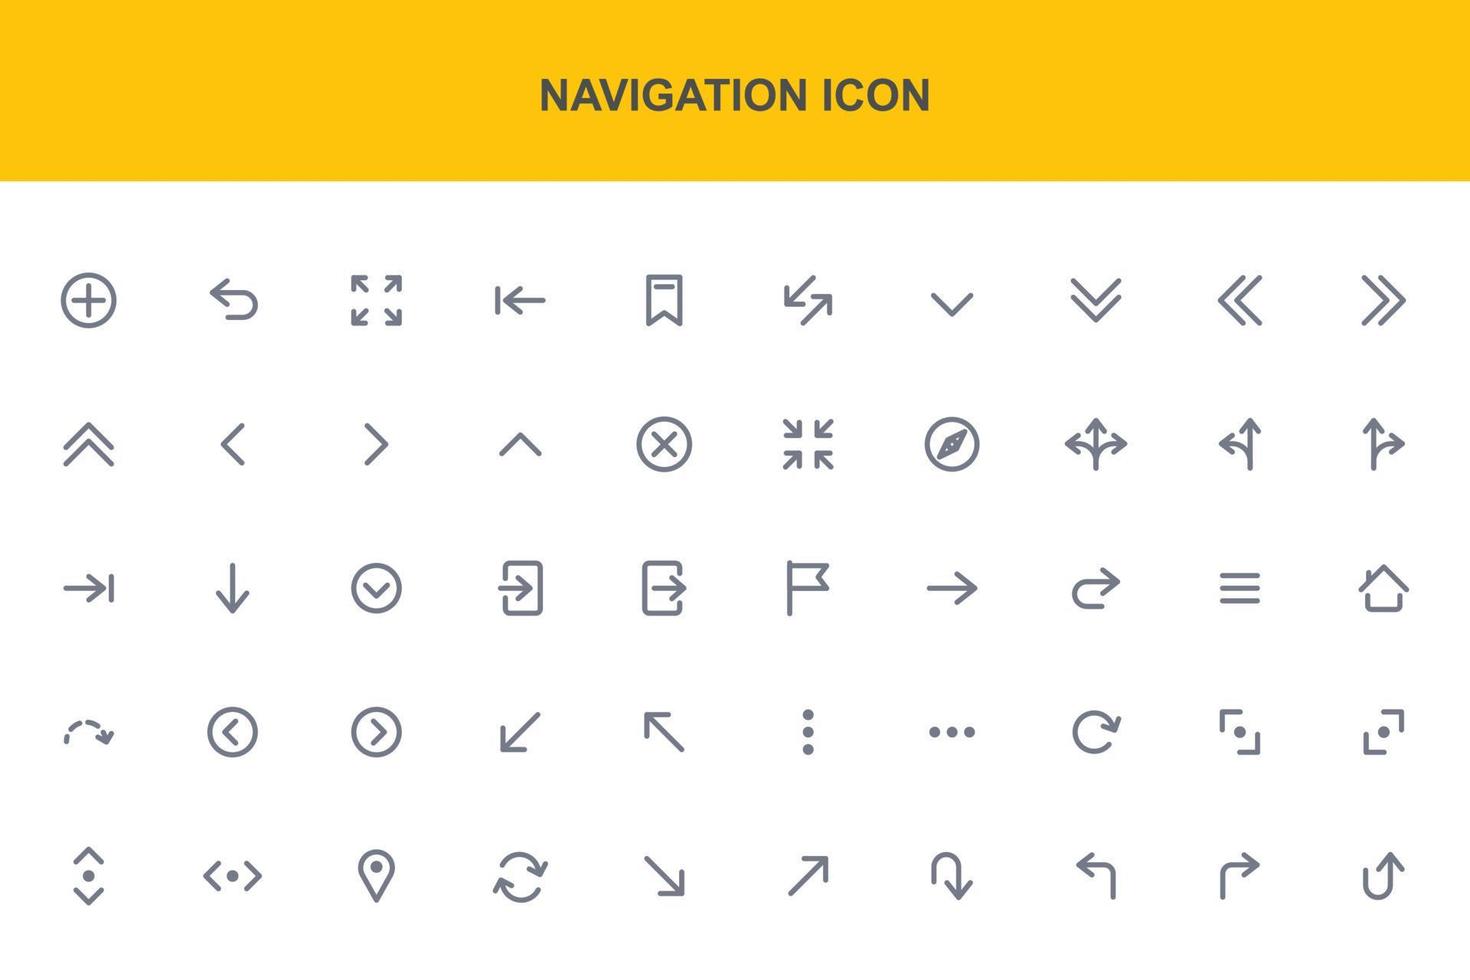 ensemble de symboles d'icônes de navigation de 50 signes vecteur